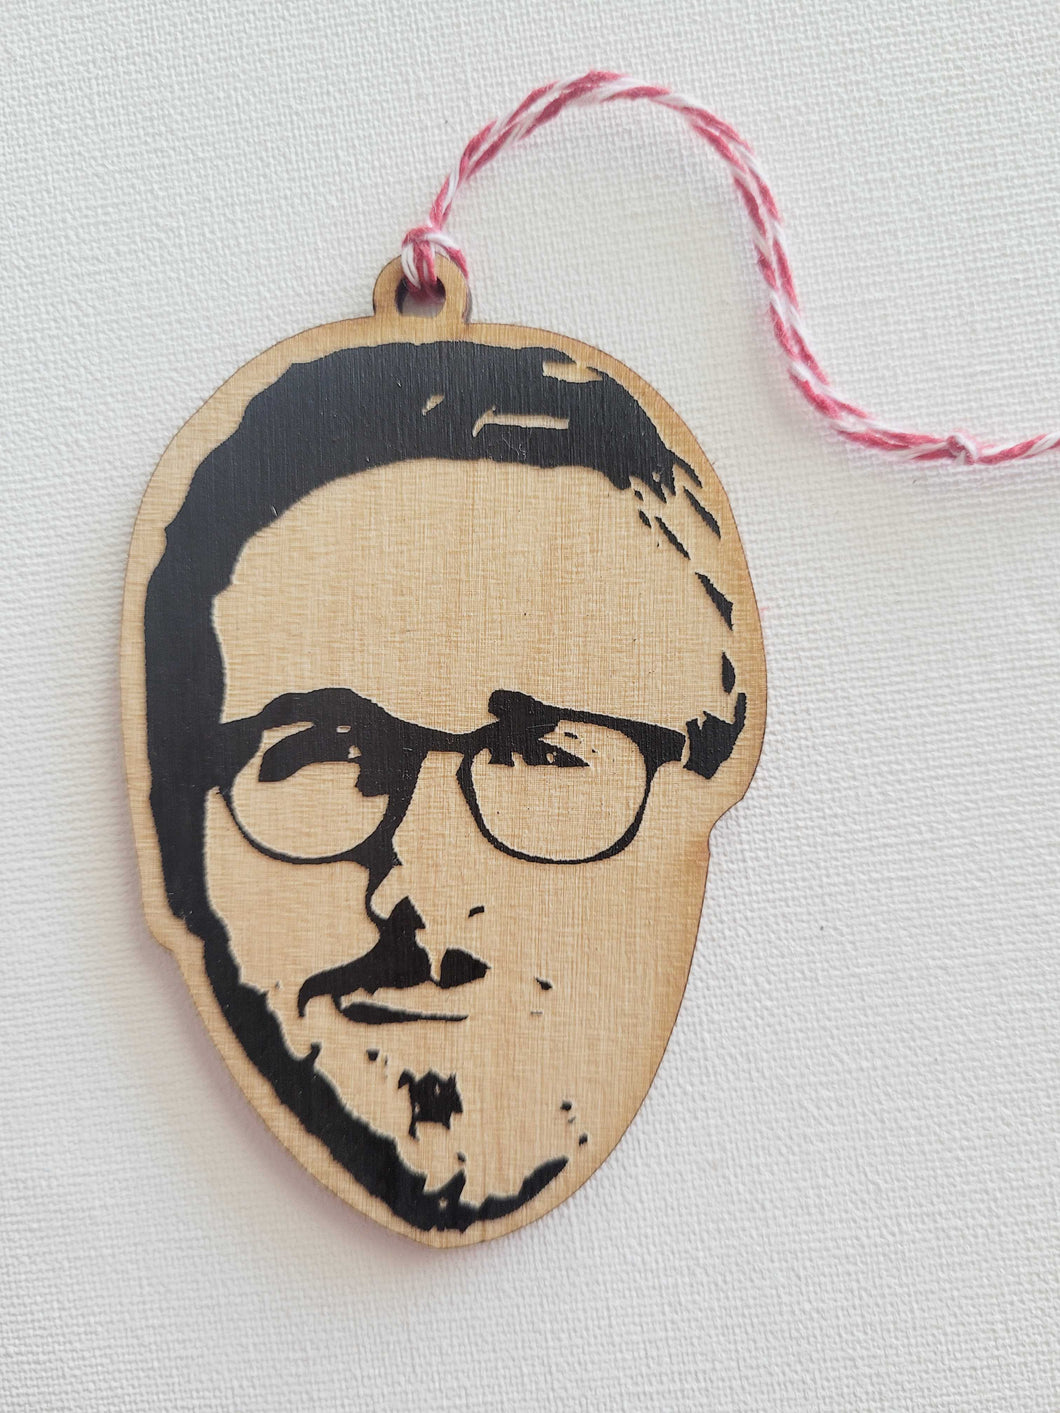 Ryan Gosling Ornament